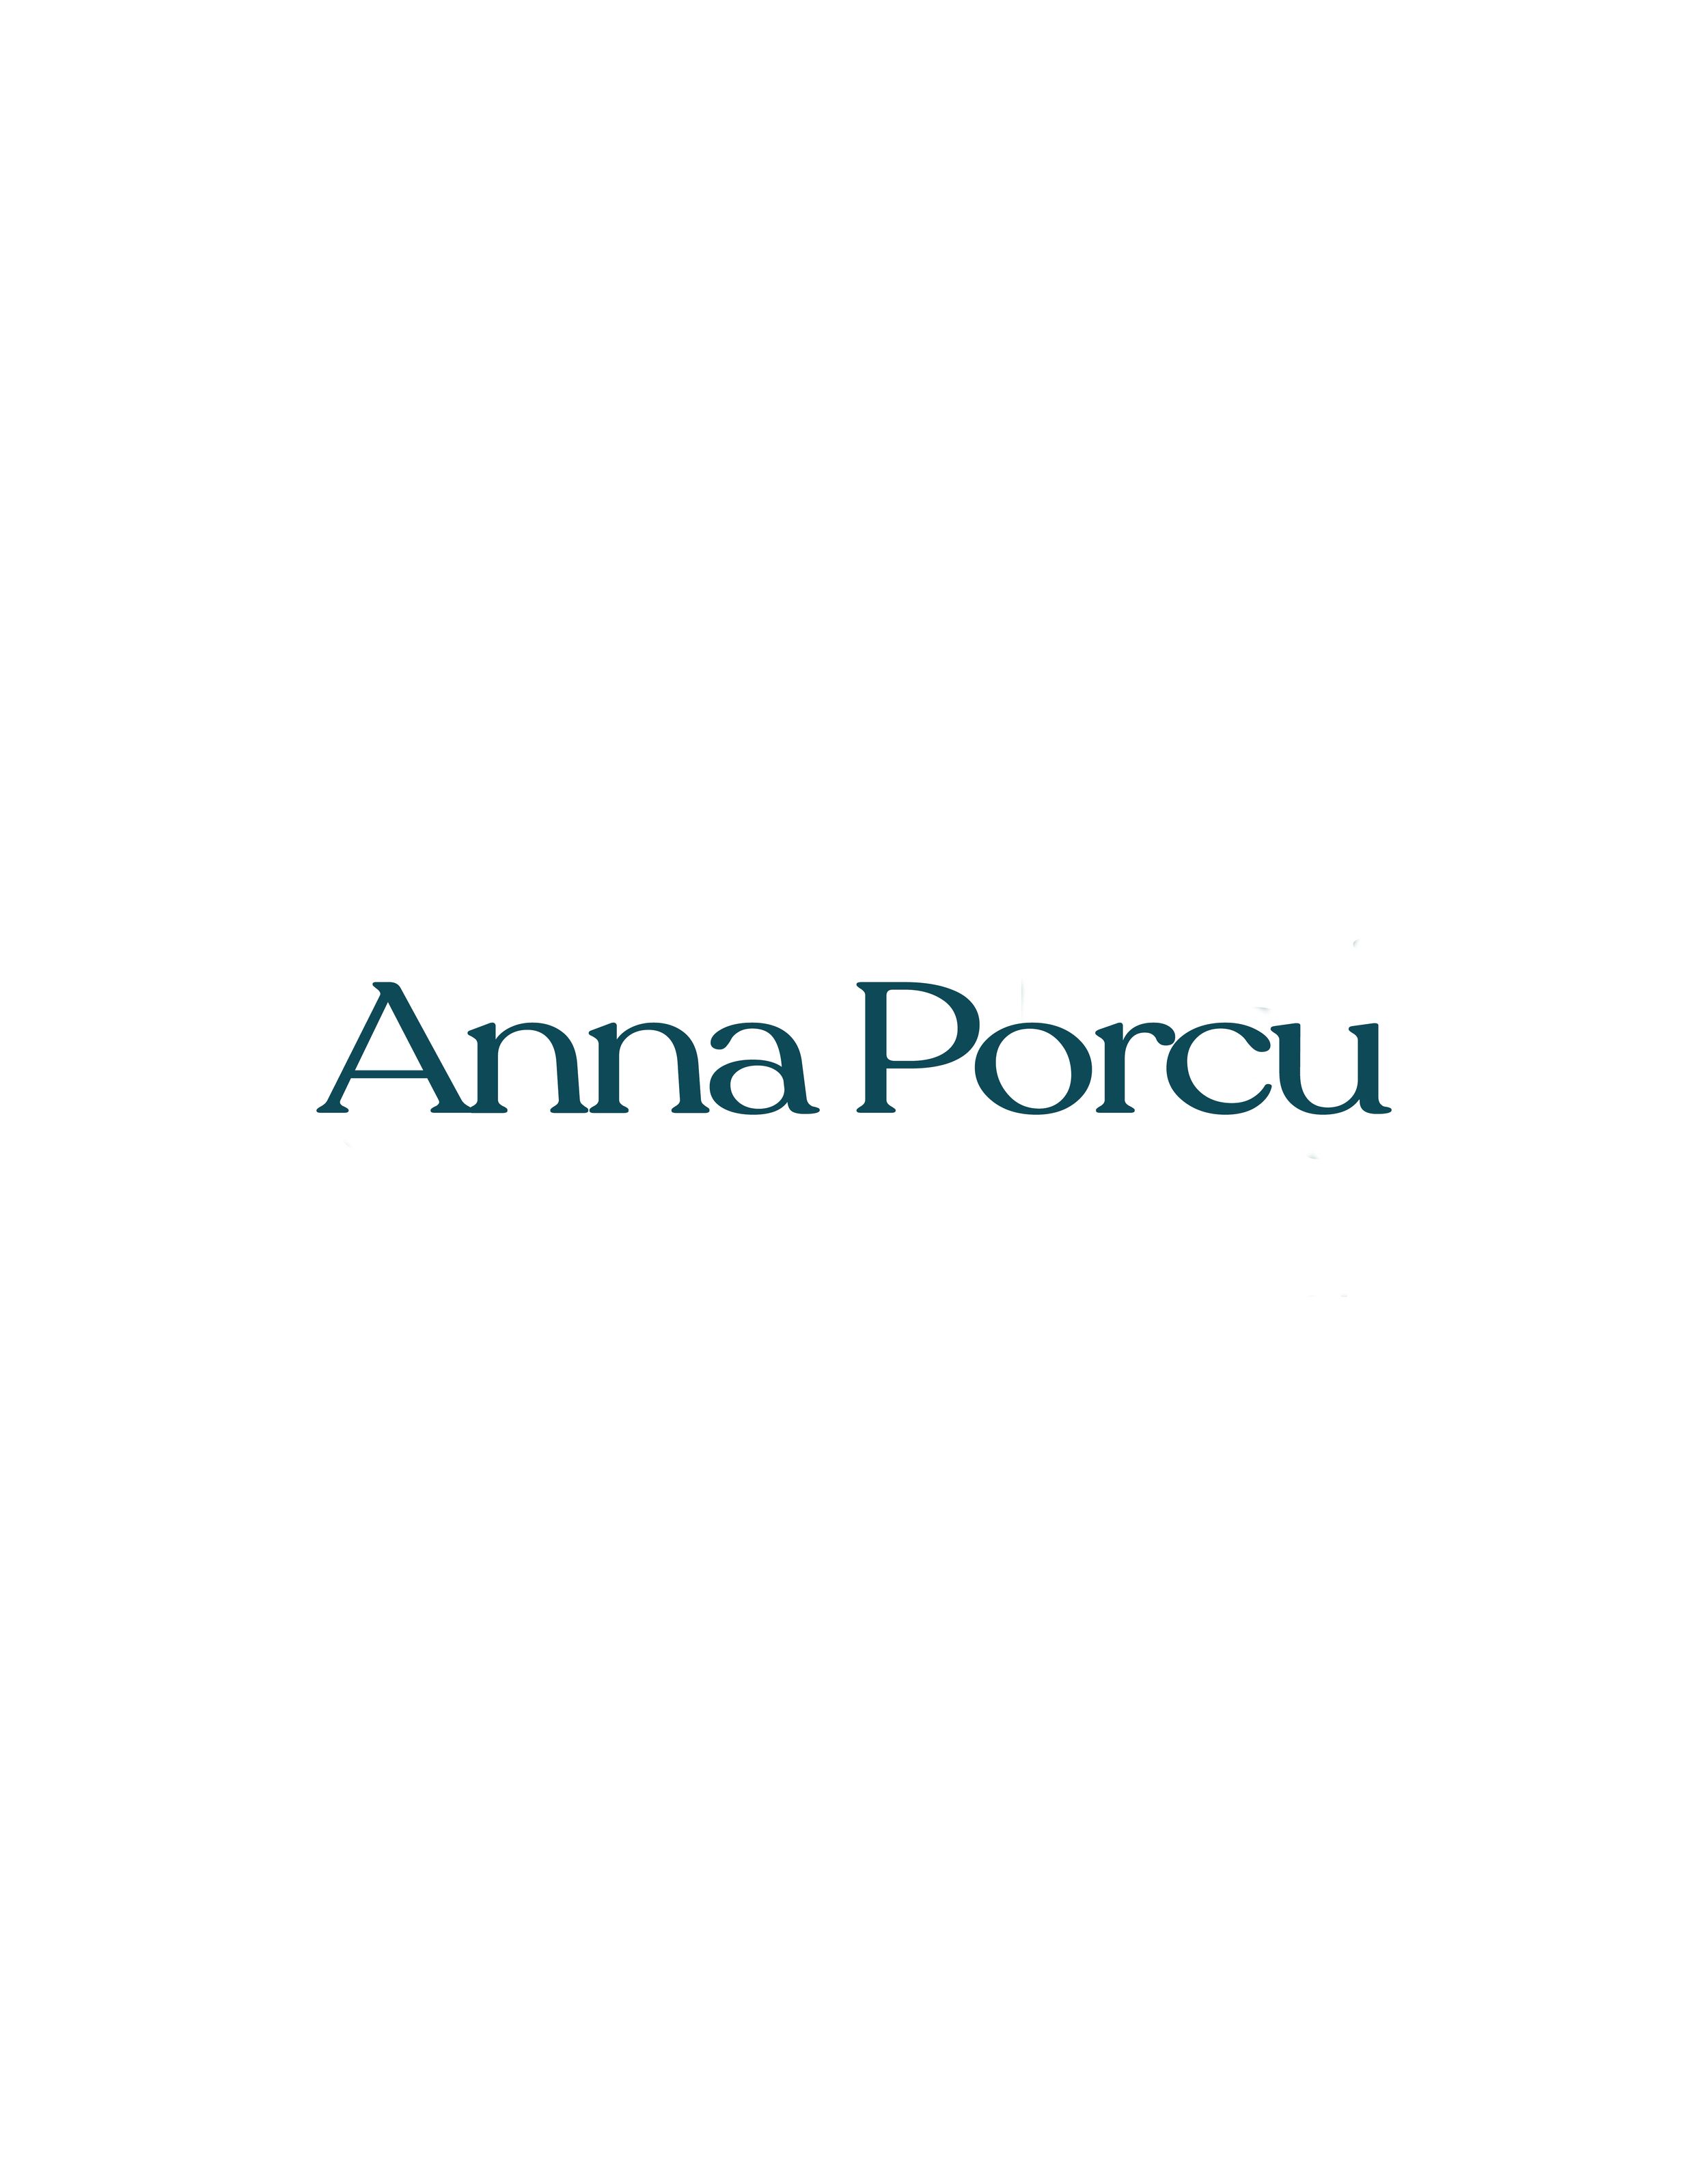 Anna Porcu.png